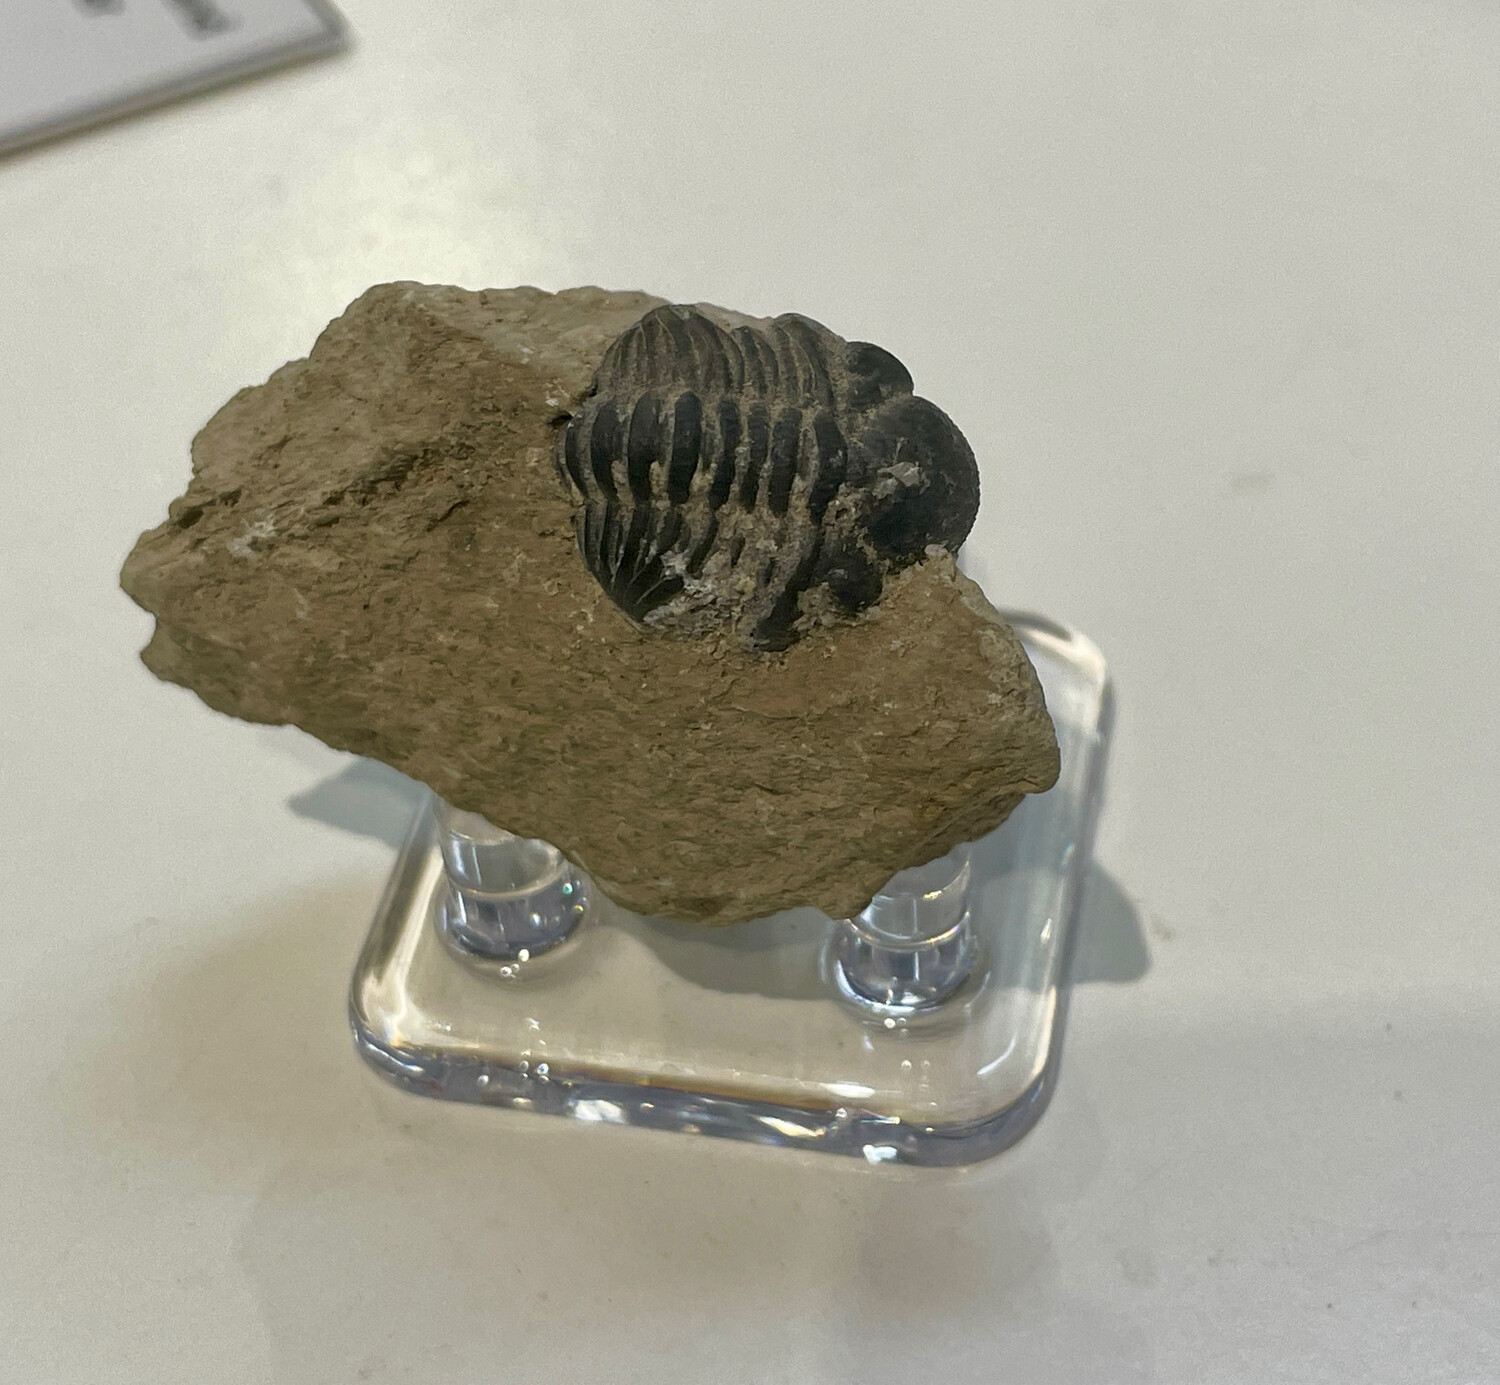 paralejurus dormedzer trilobite 27.92g